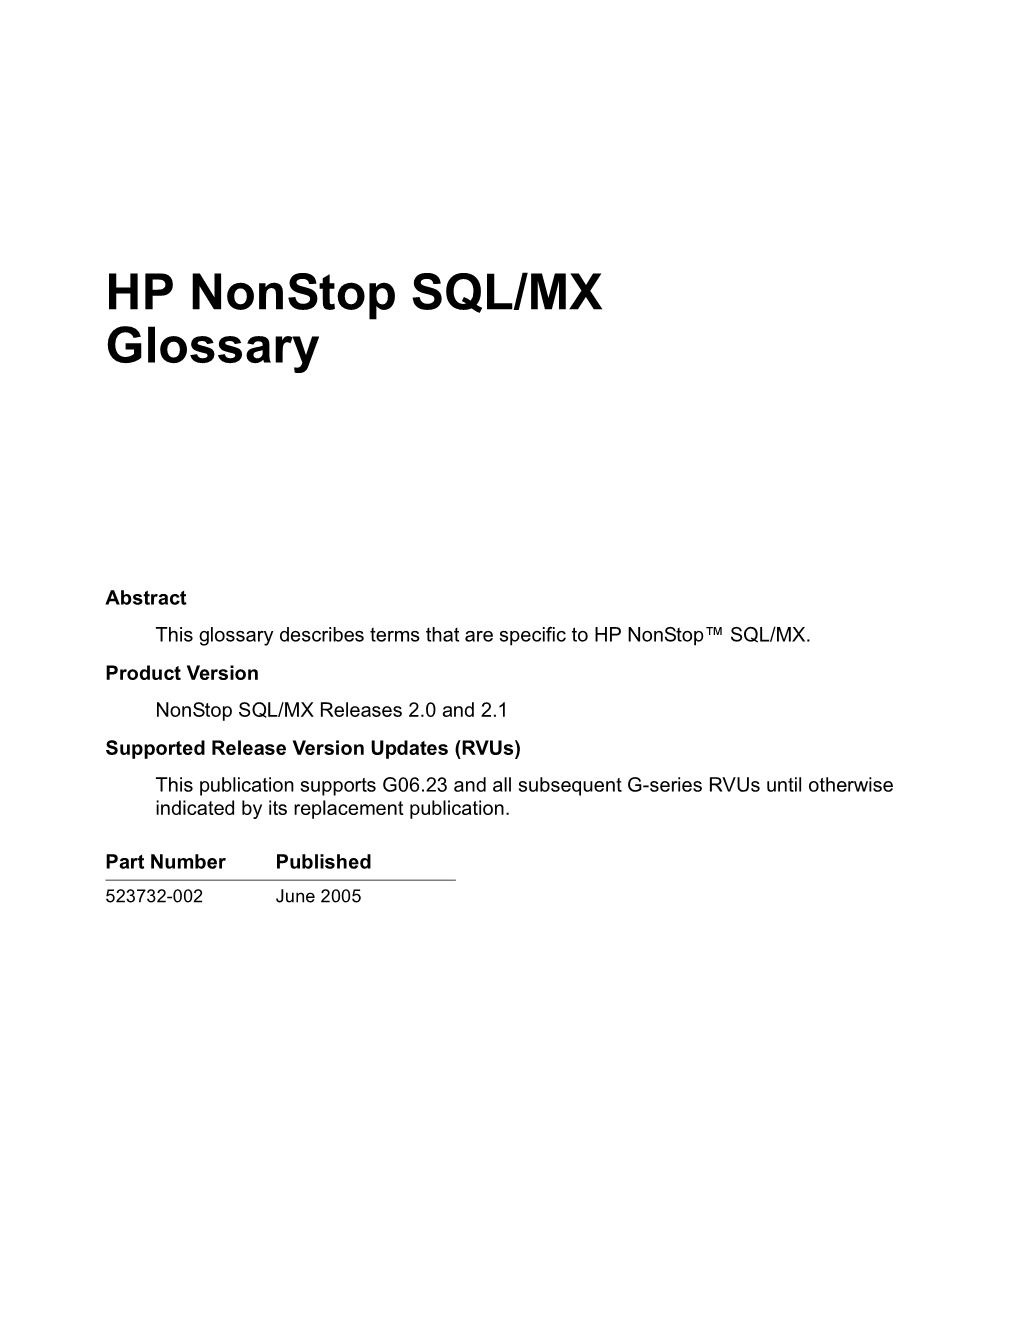 HP Nonstop SQL/MX Glossary